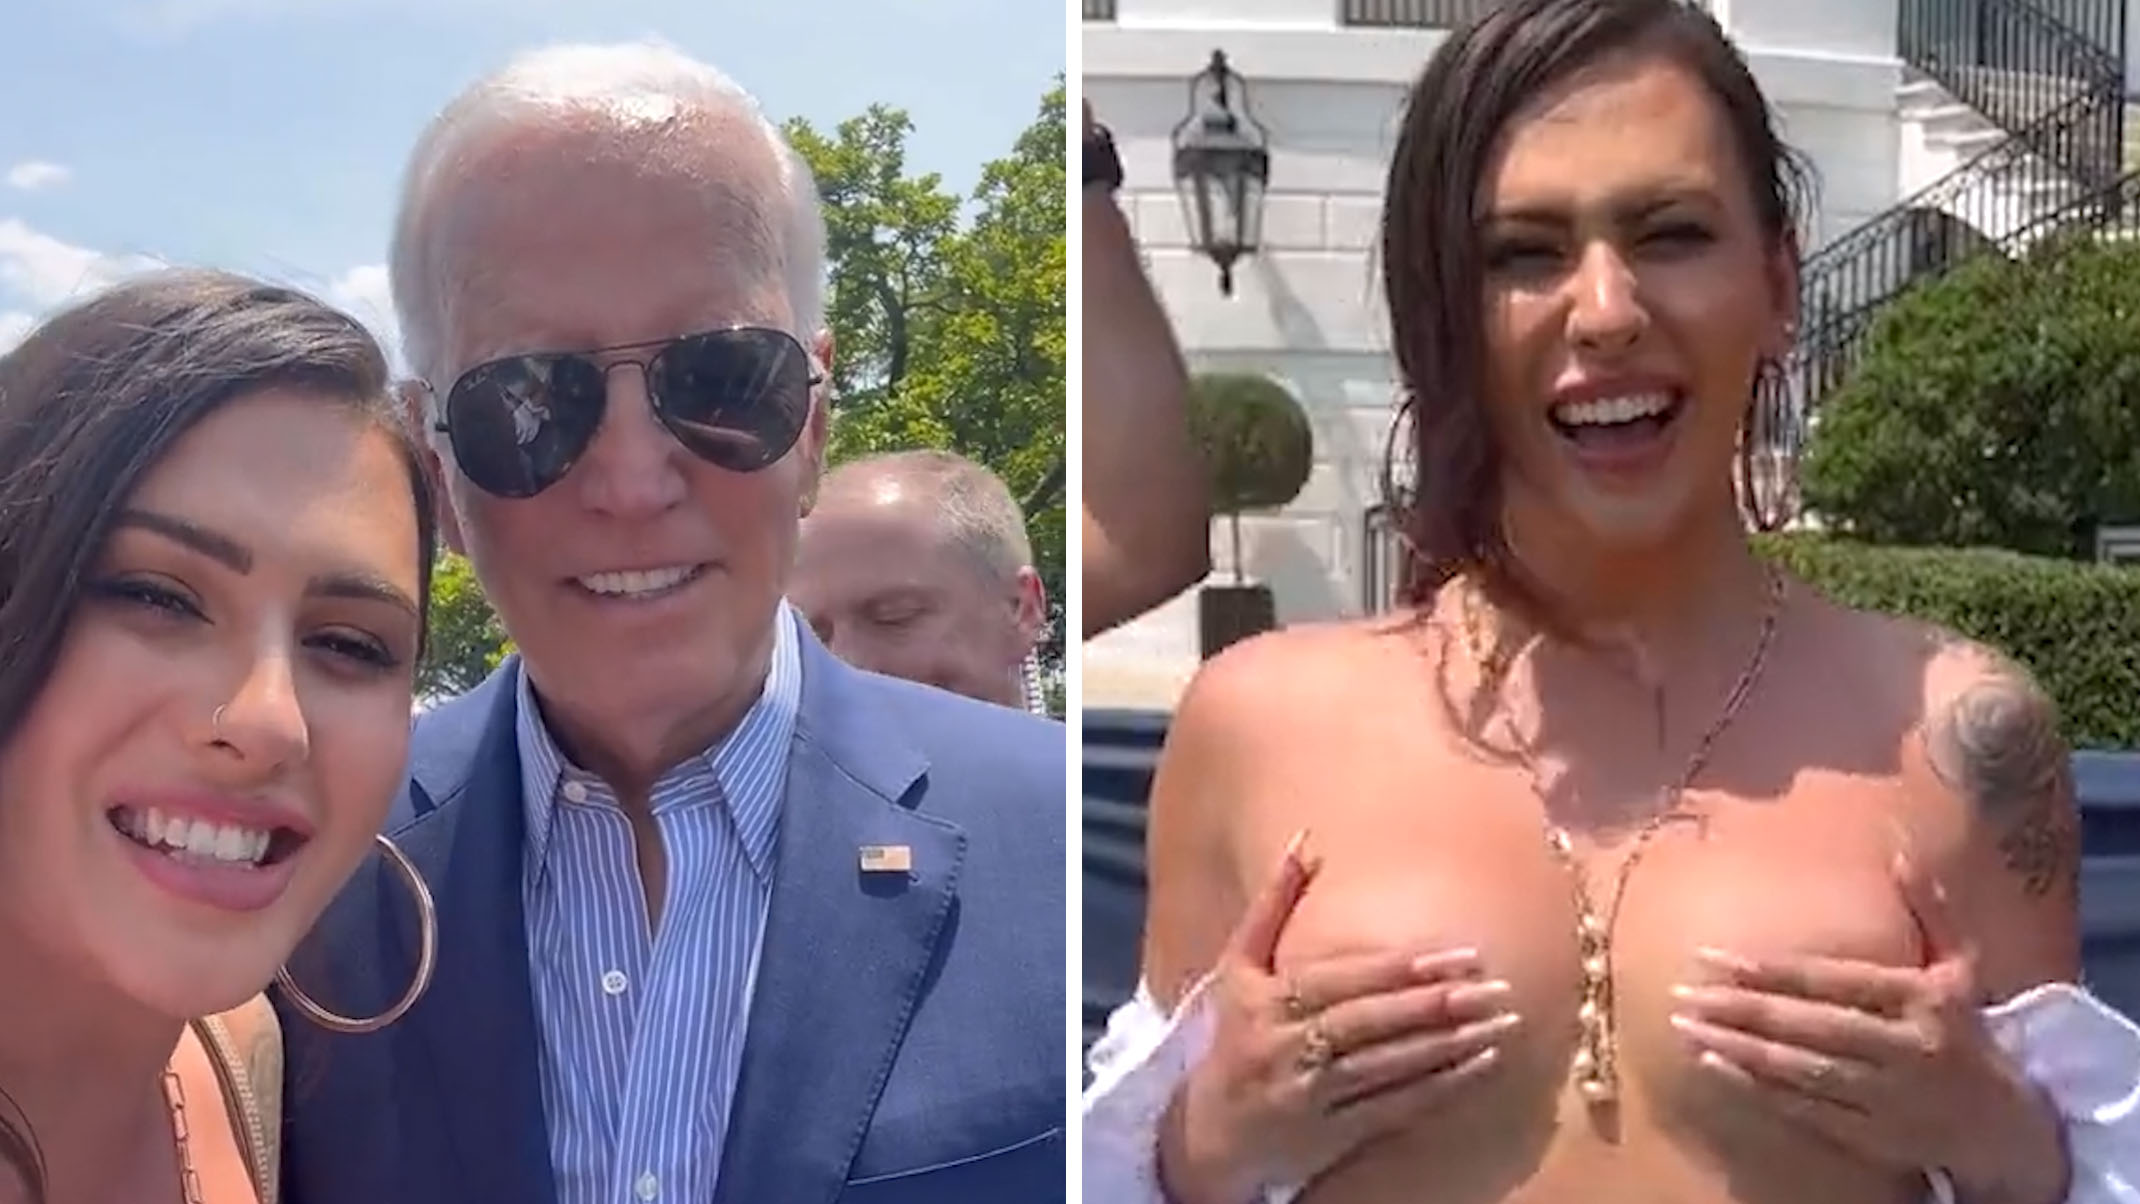 DeSantis criticizes Biden over ‘inappropriate’ transgender event at White House.